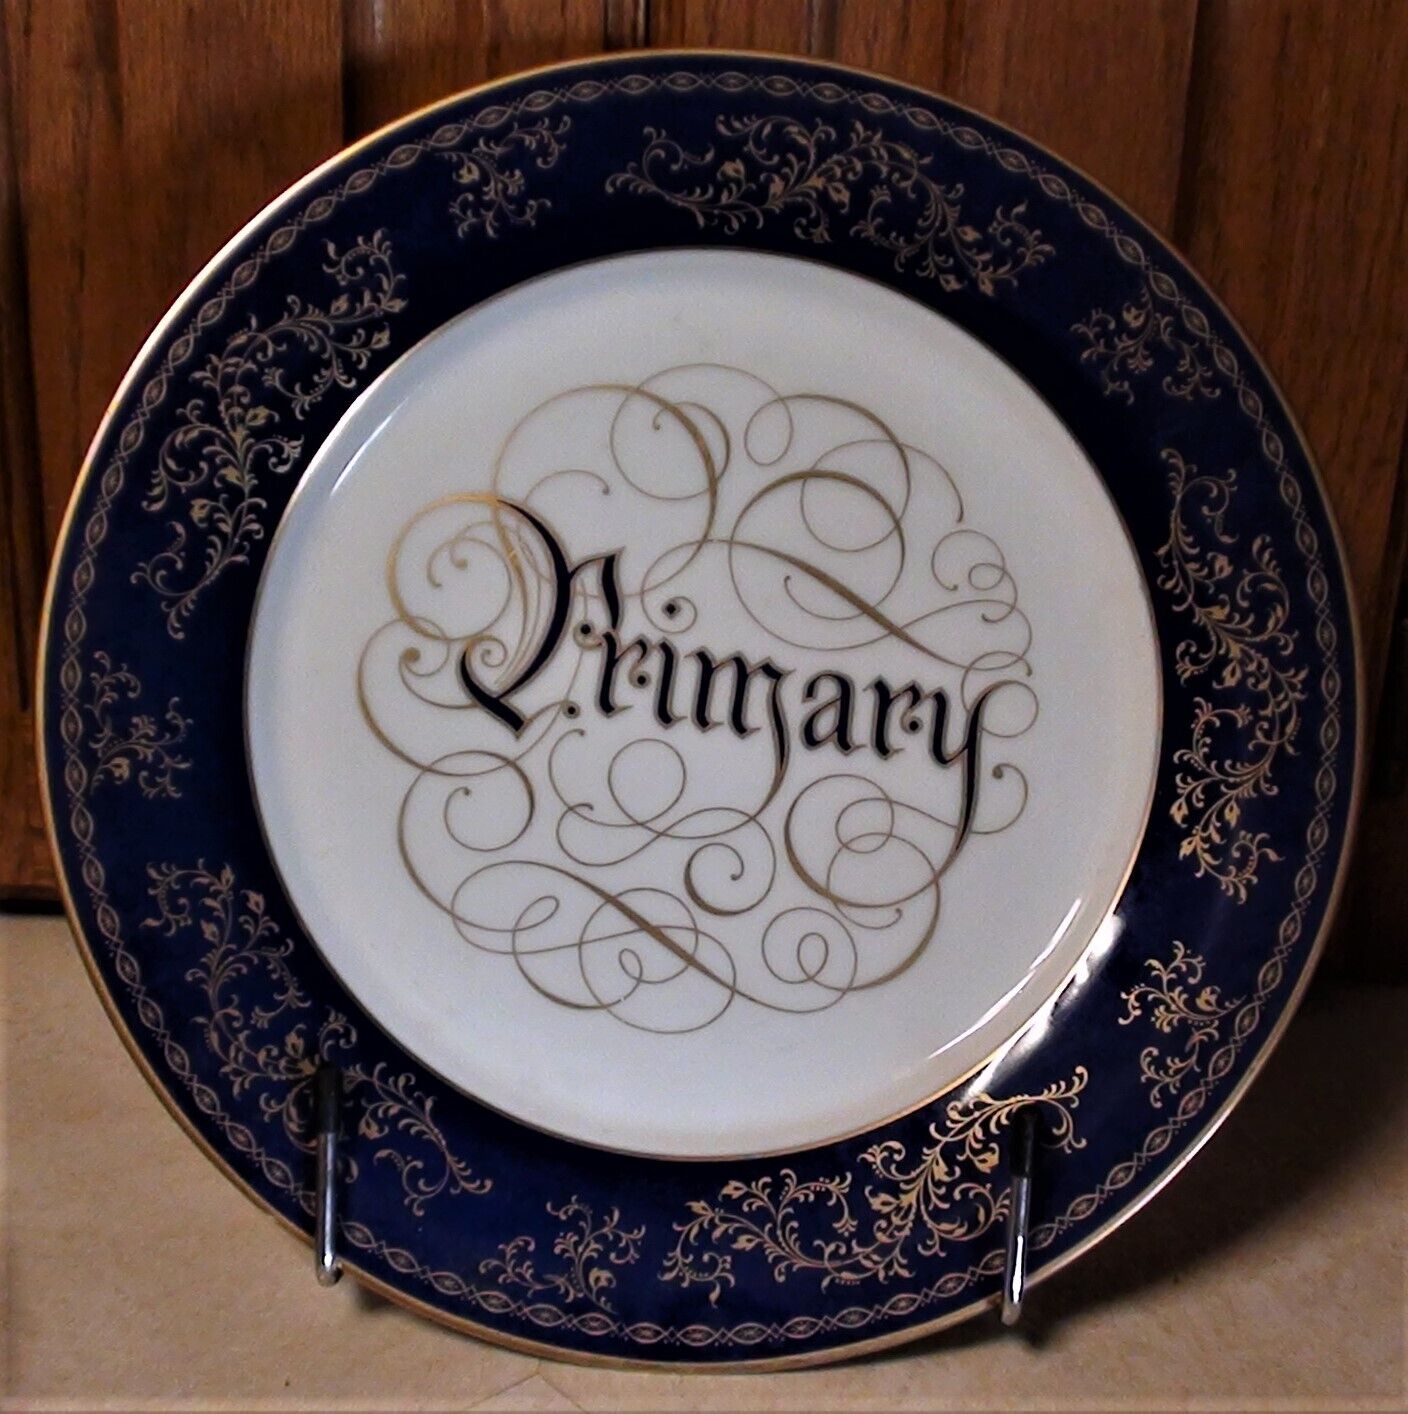 Primary Commemorative Plate 1878-1978 Mormon LDS Farmington Utah 100 Years